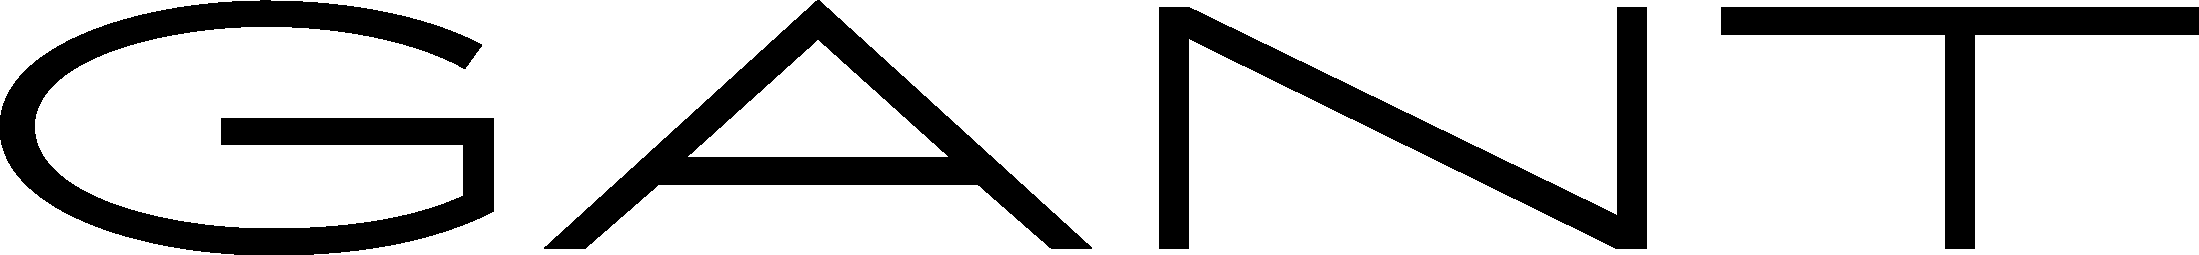 Gant Logo Download Vector.